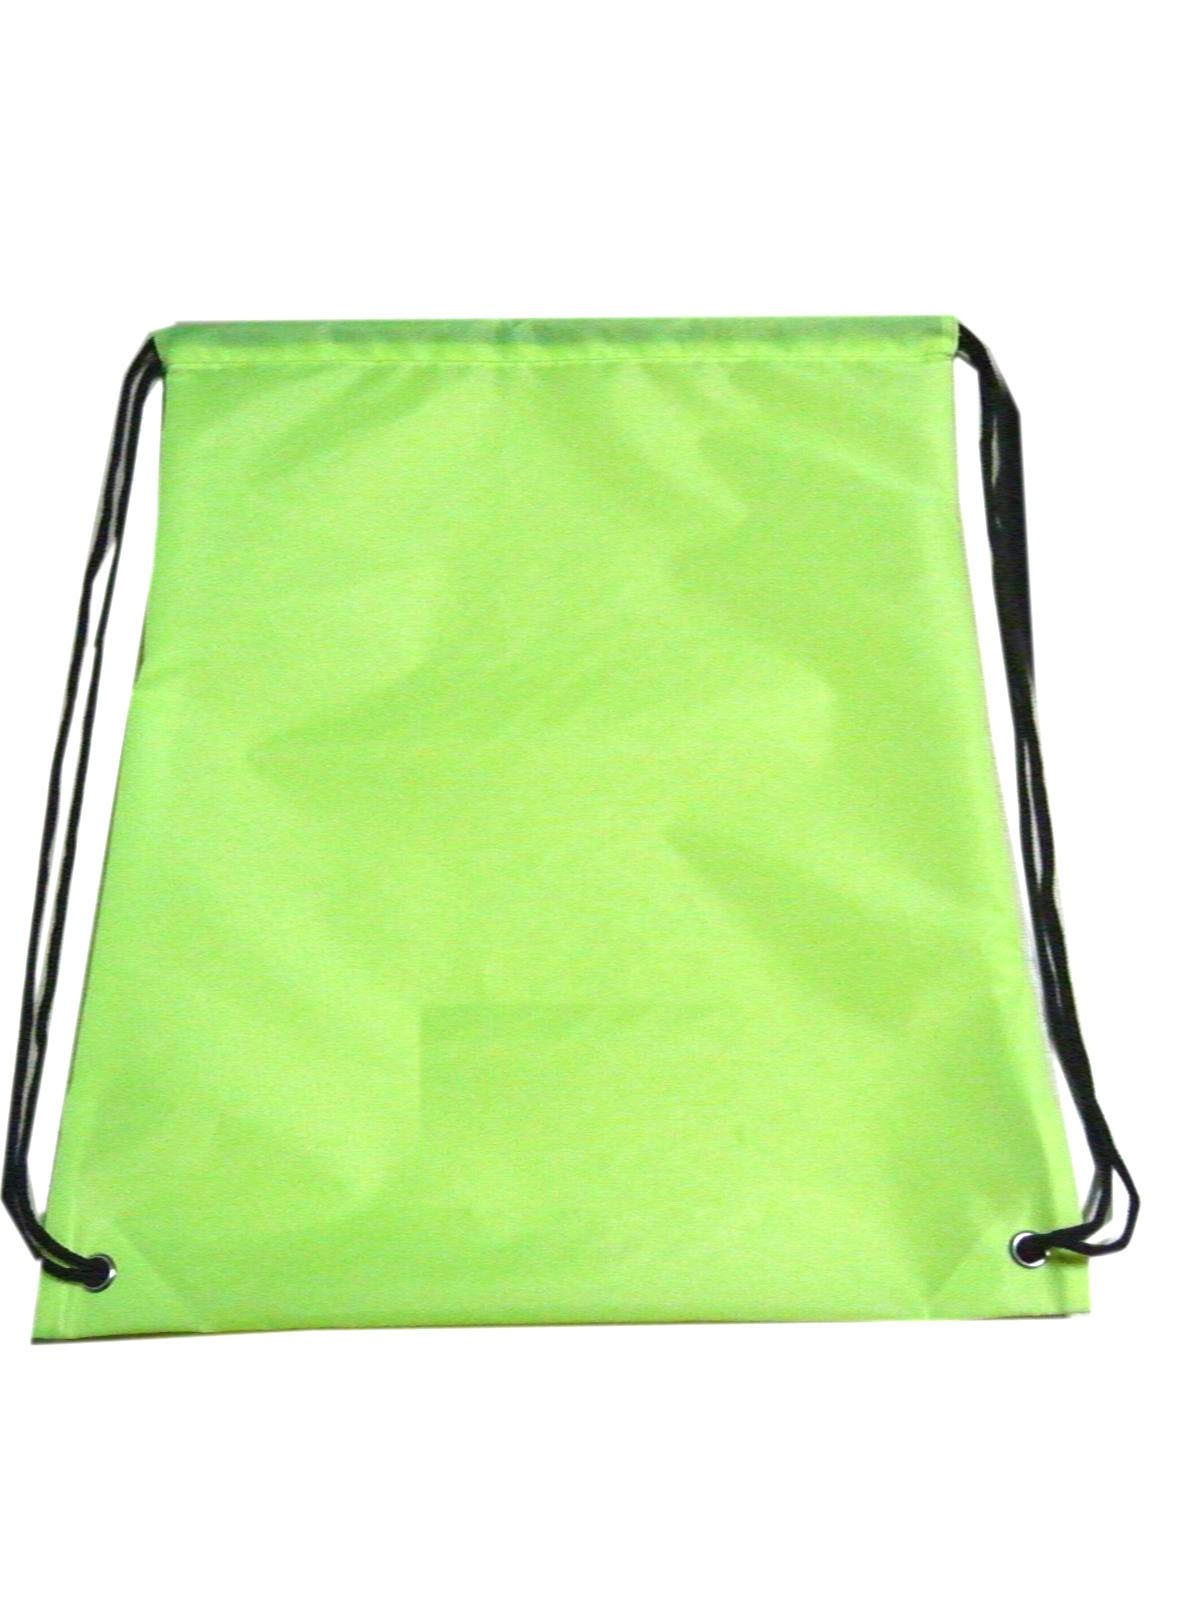 2016 Fashion Green Nylon Cheap Drawstring Bag For Gift Or ...